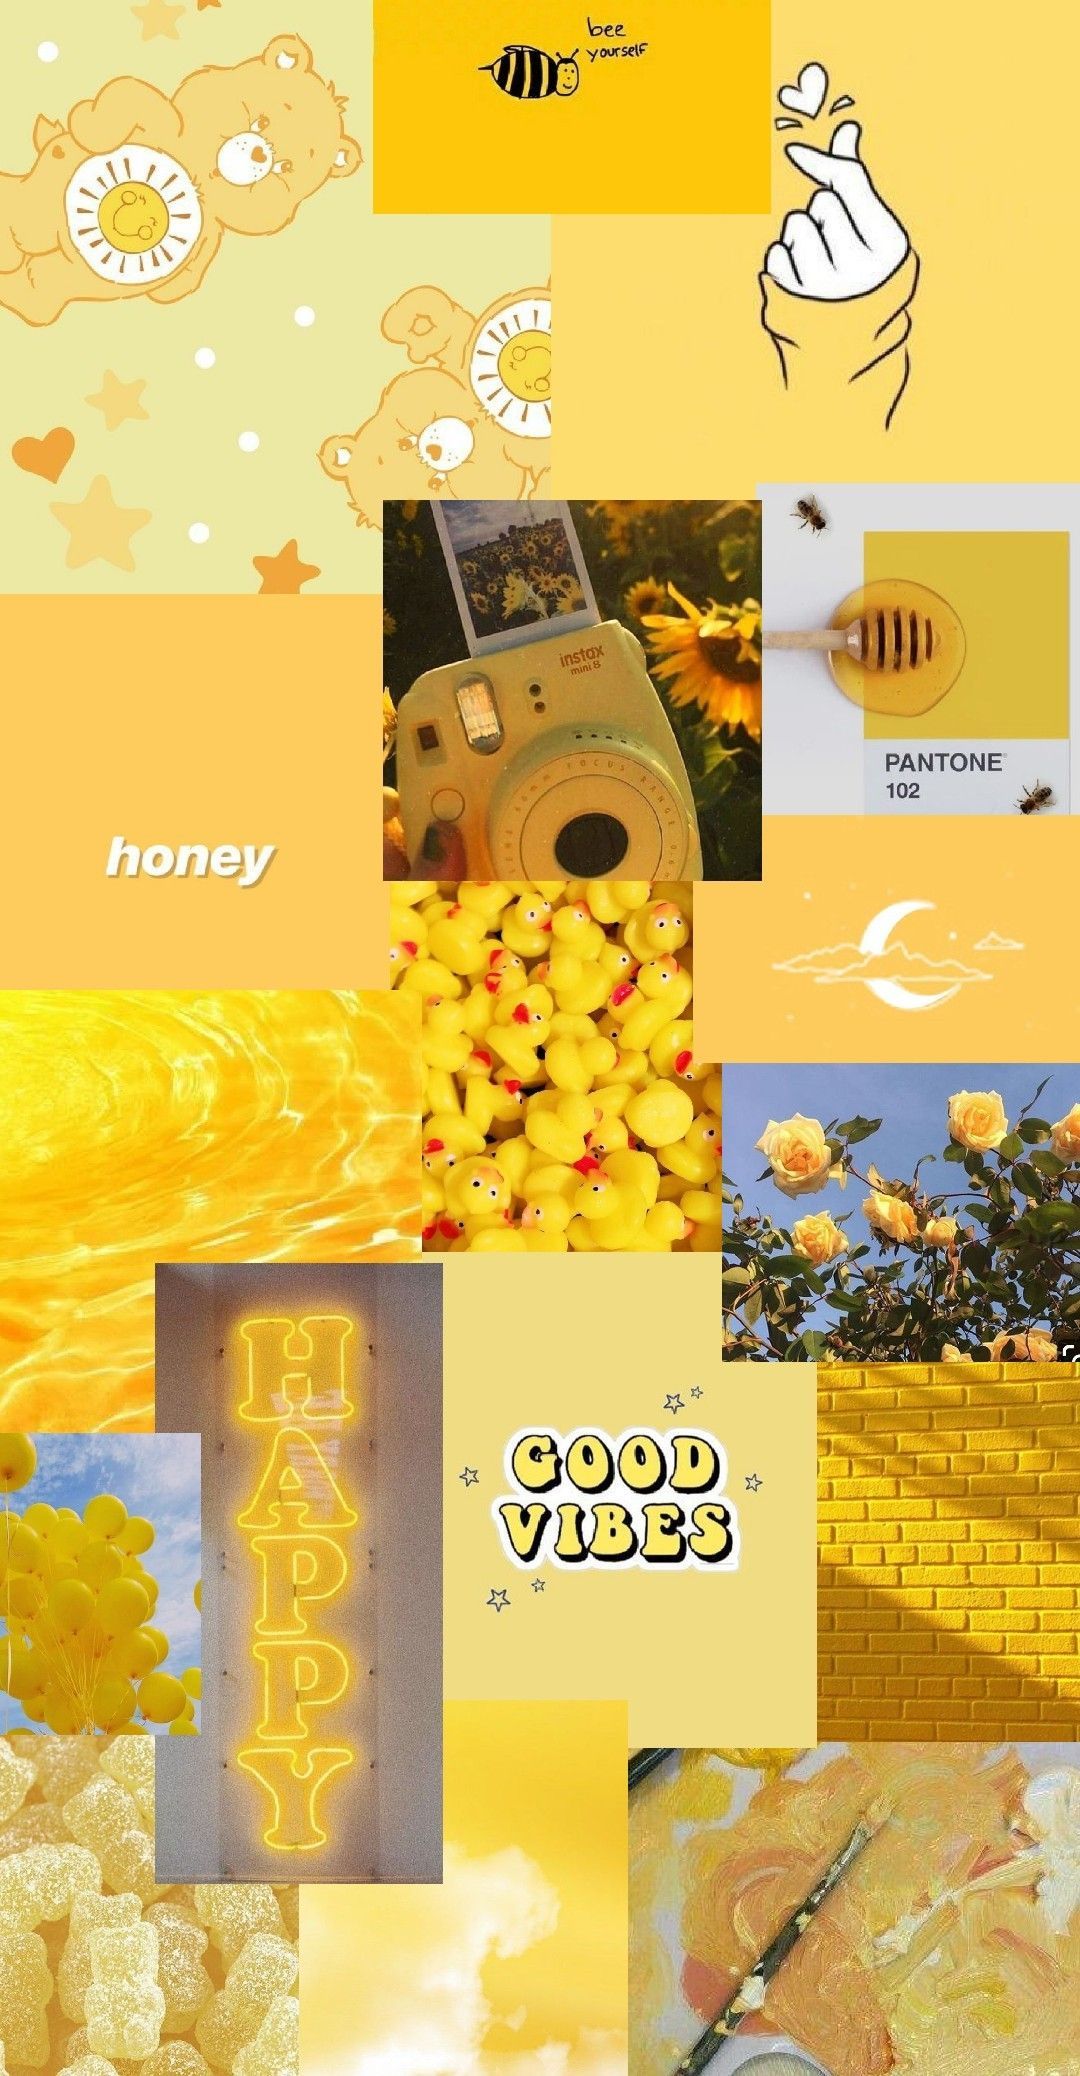 Yellow aesthetic wallpaper. iPhone wallpaper yellow, Cute wallpaper background, iPhone wallpaper themes